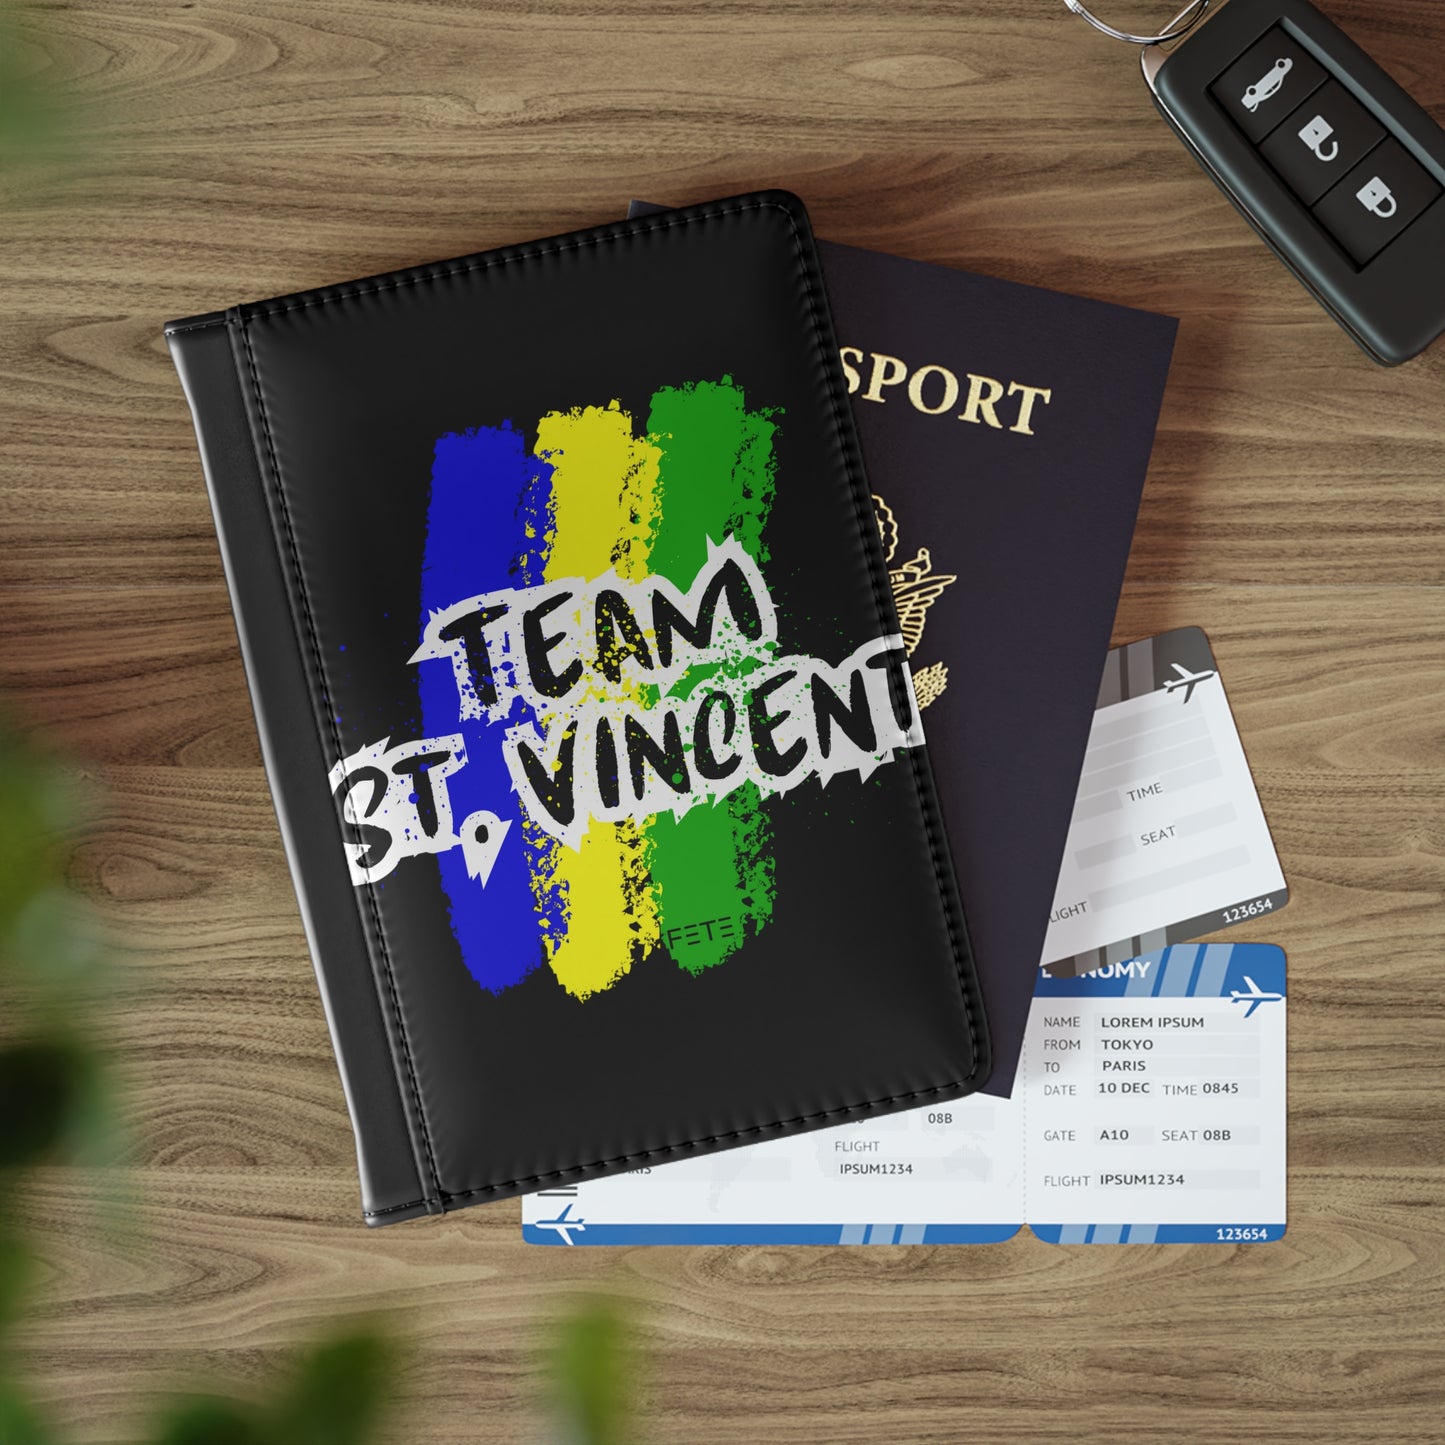 Team St. Vincent Passport Cover